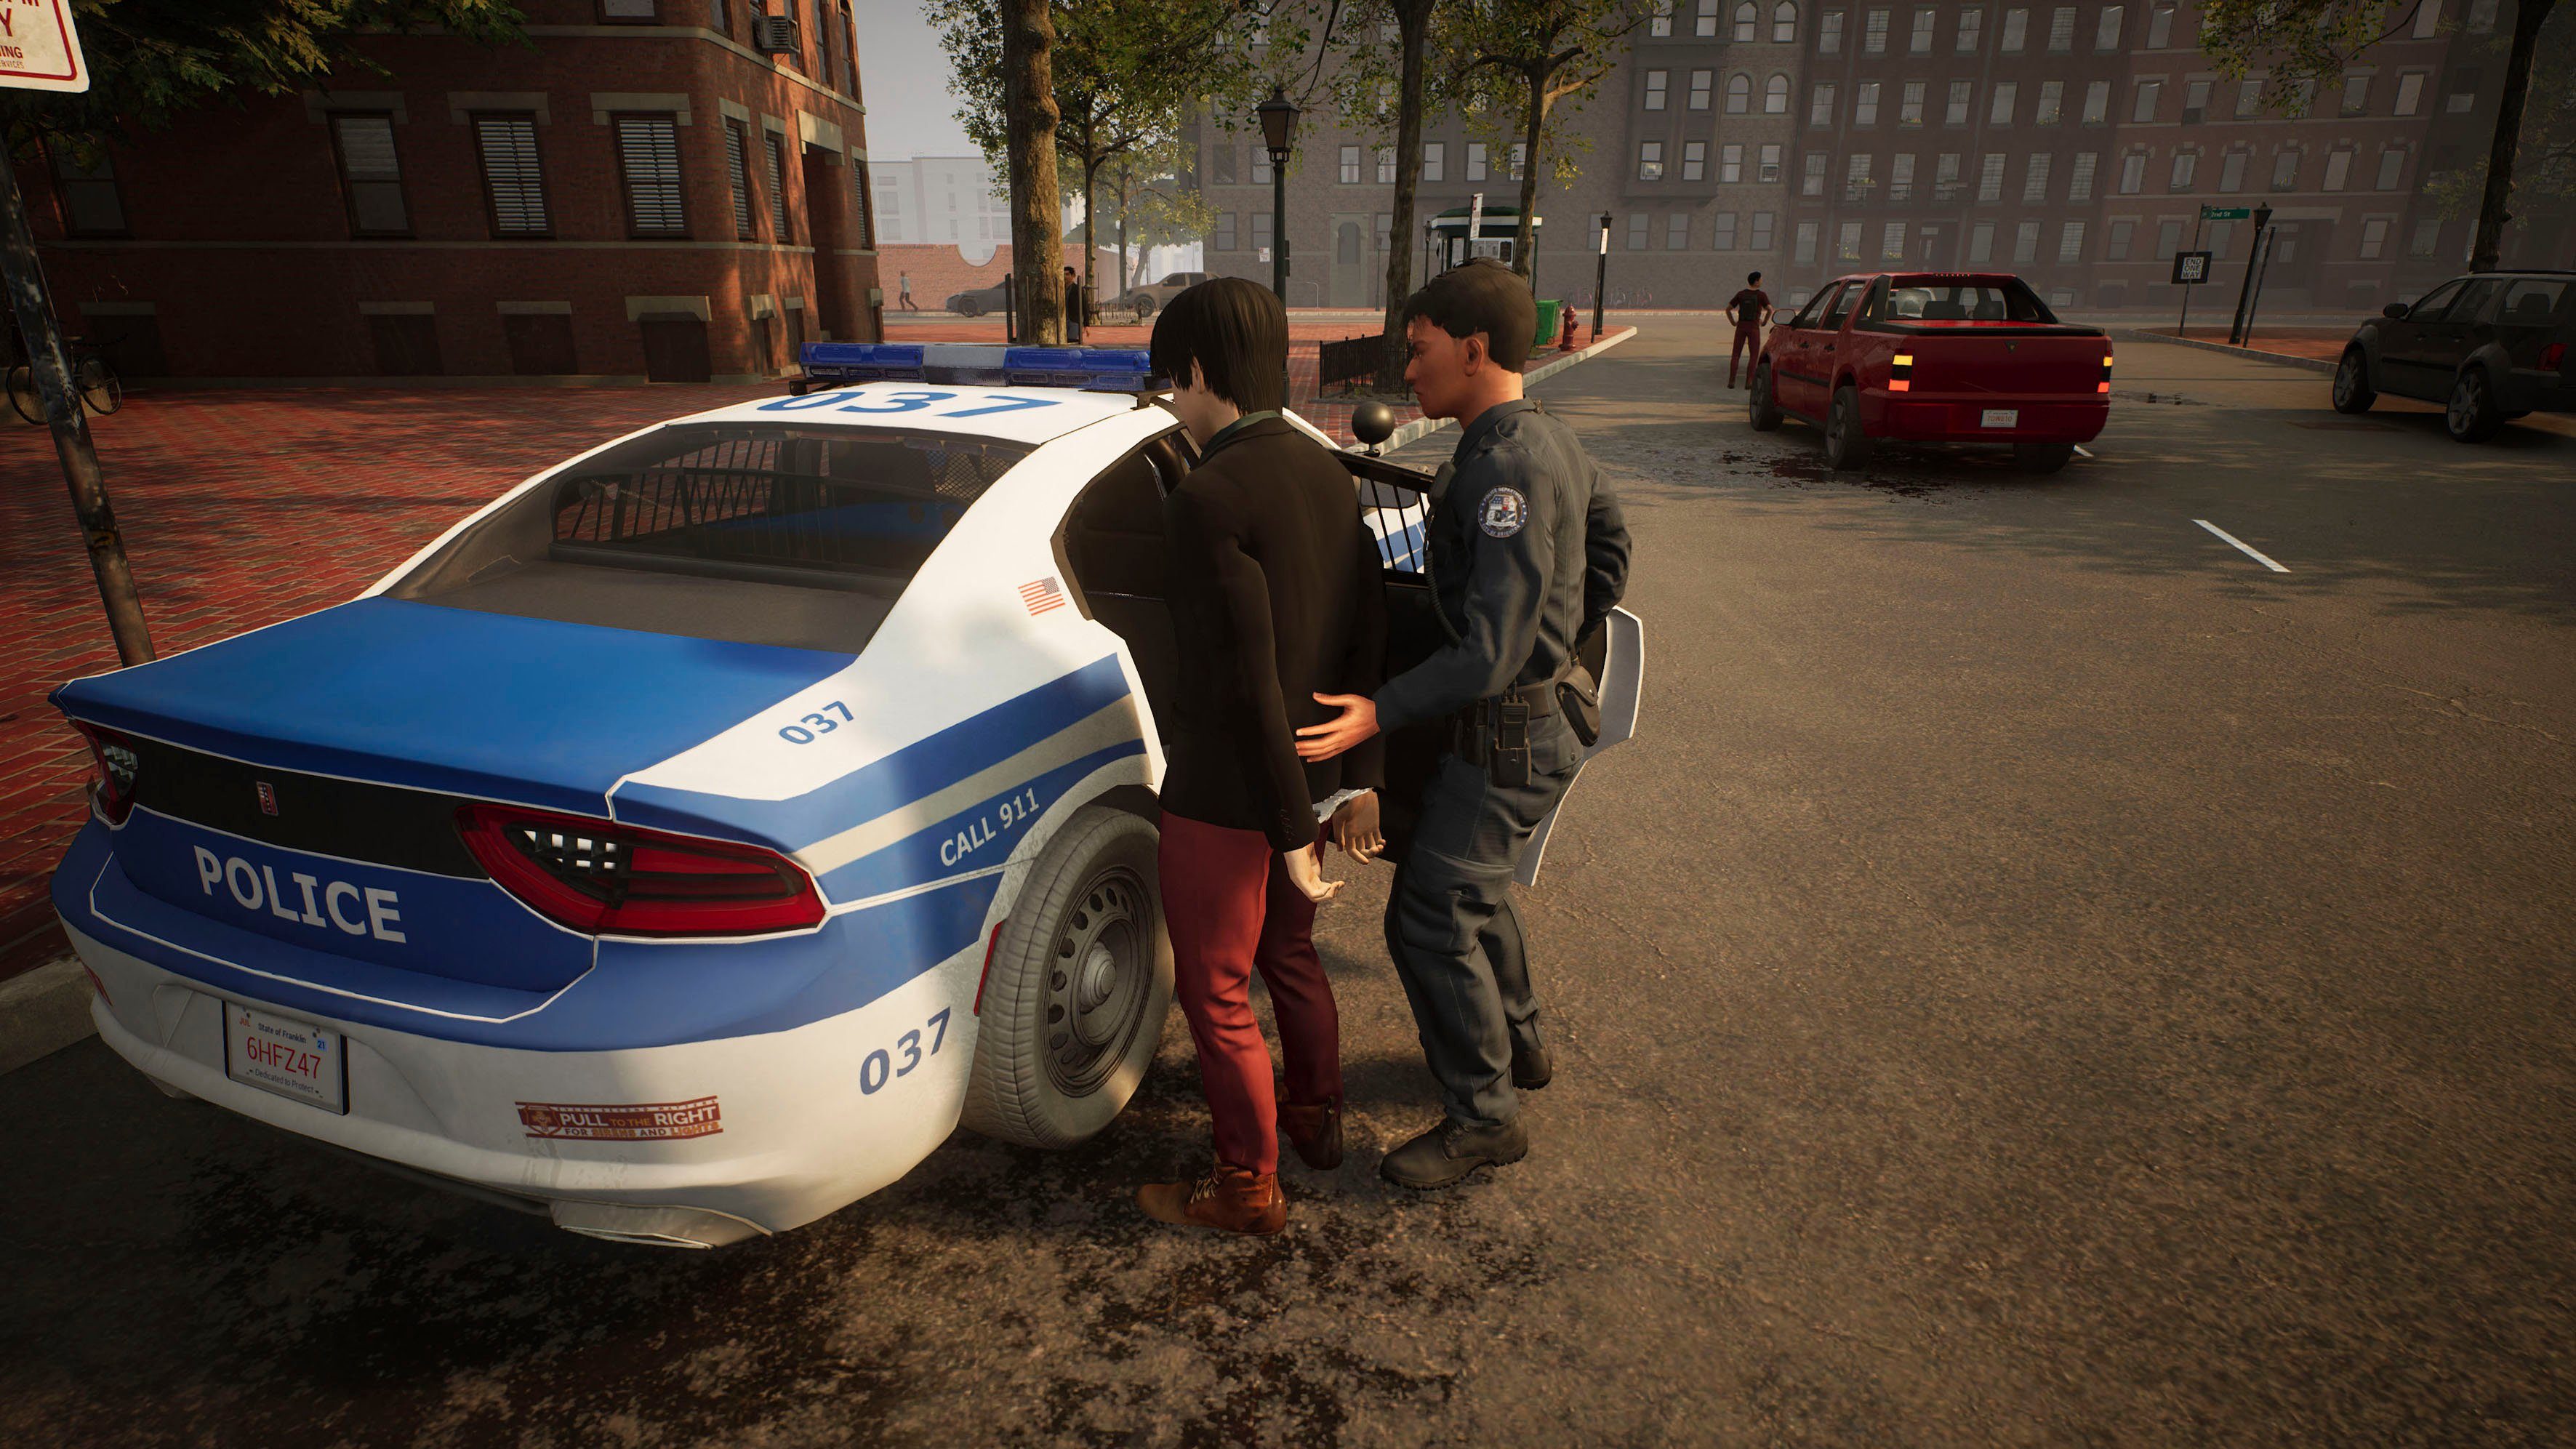 Patrol 5 Astragon PlayStation Officers Simulator: Police